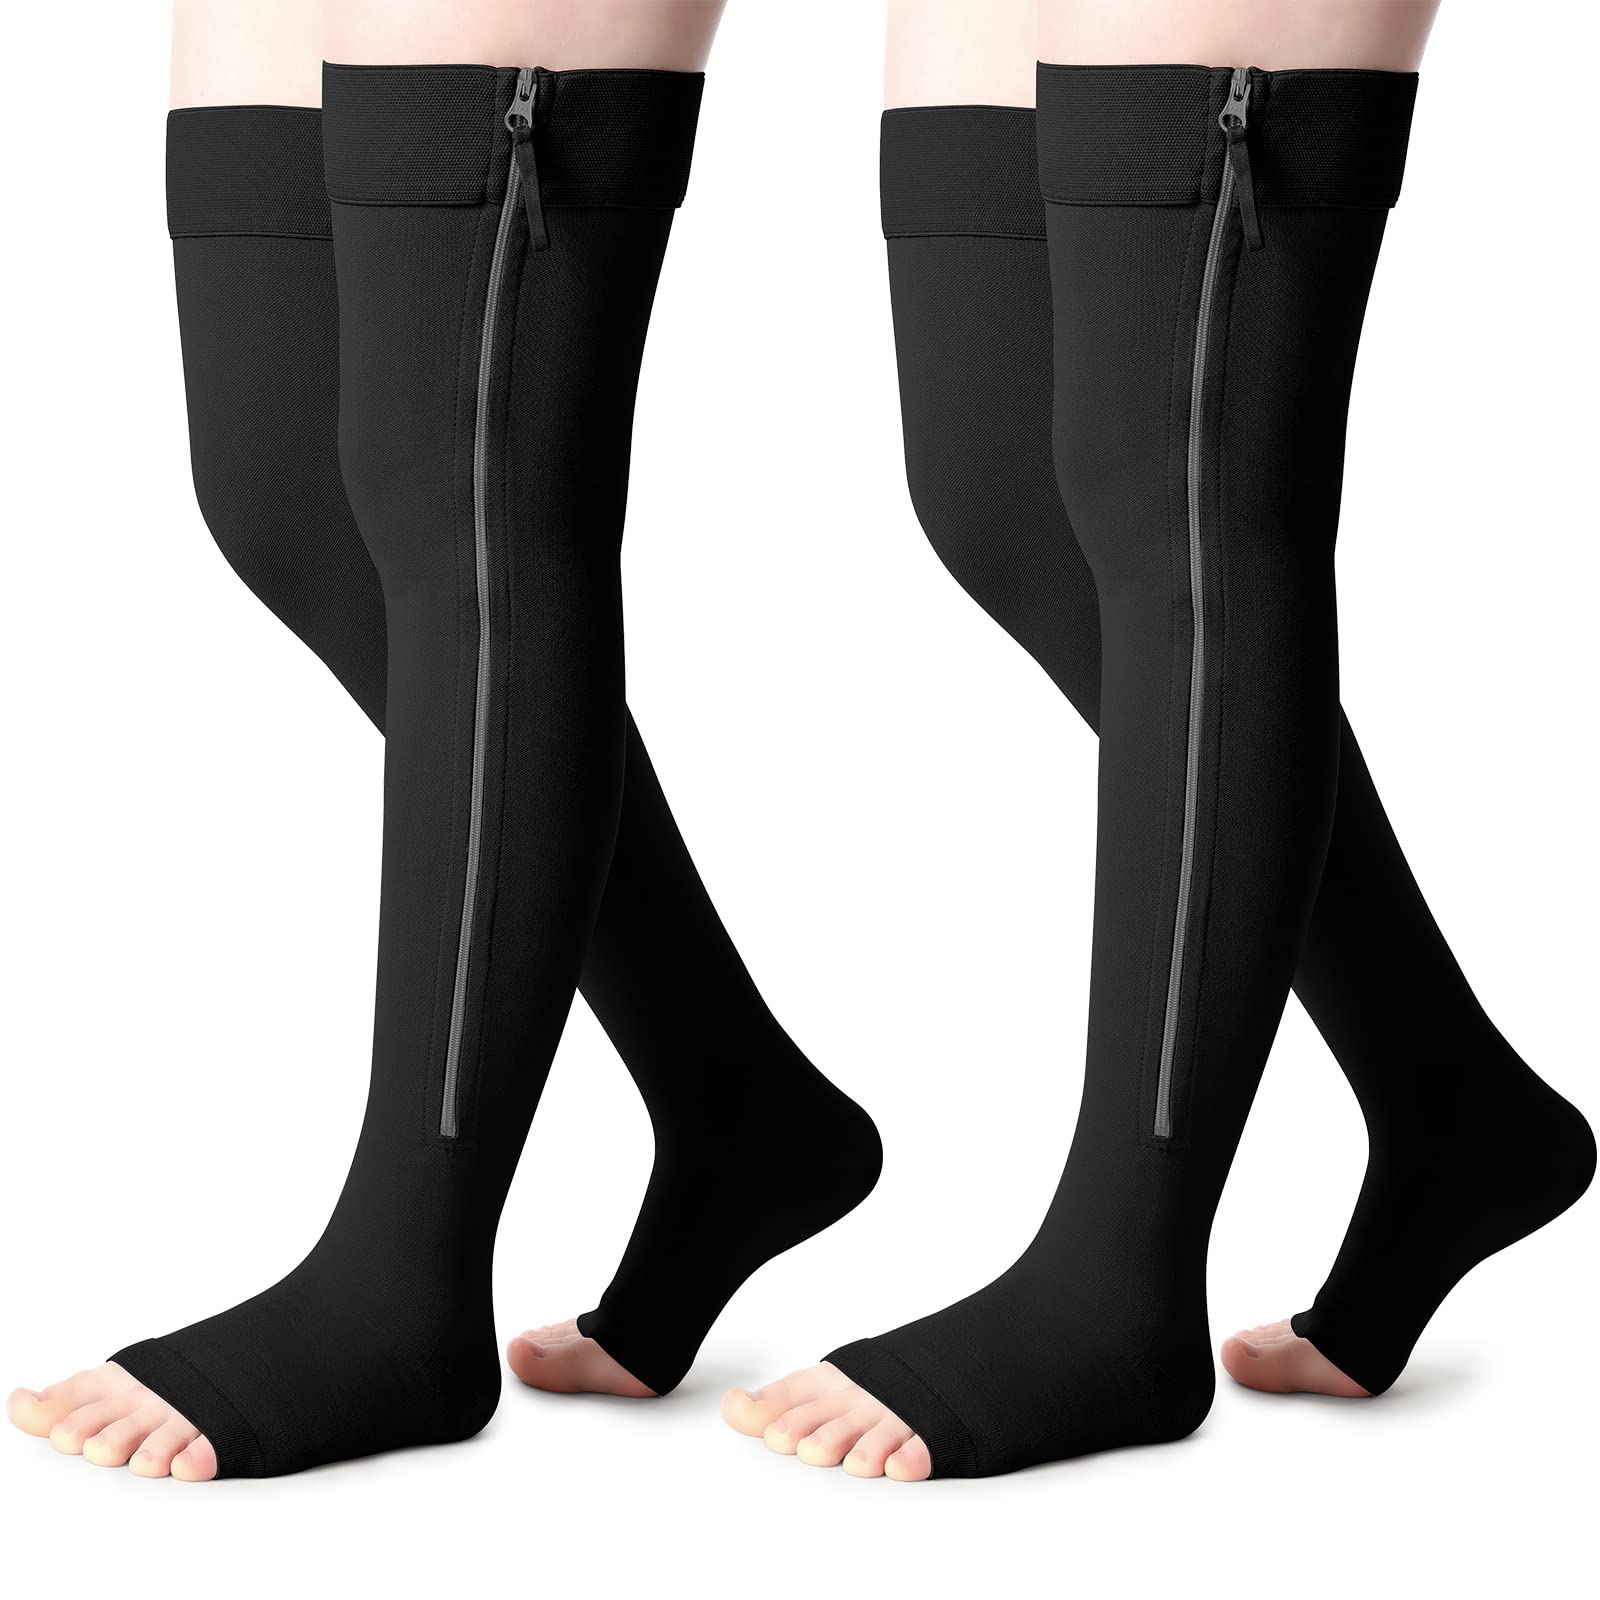 Medical 15-20 mmHg Zipper Compression Socks Women Men